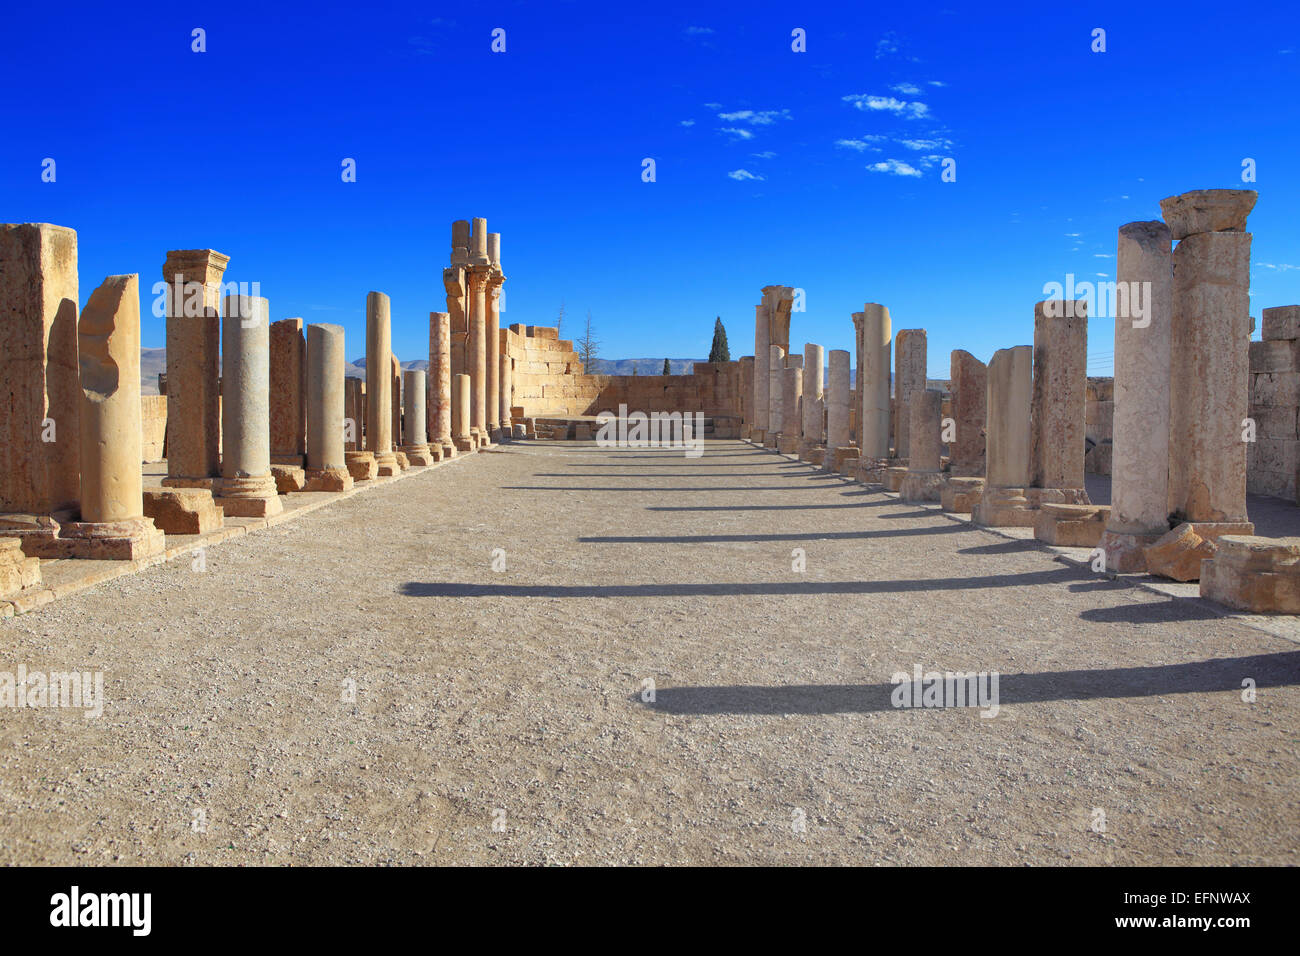 Street of ancient Roman town, Tebessa, Algeria Stock Photo